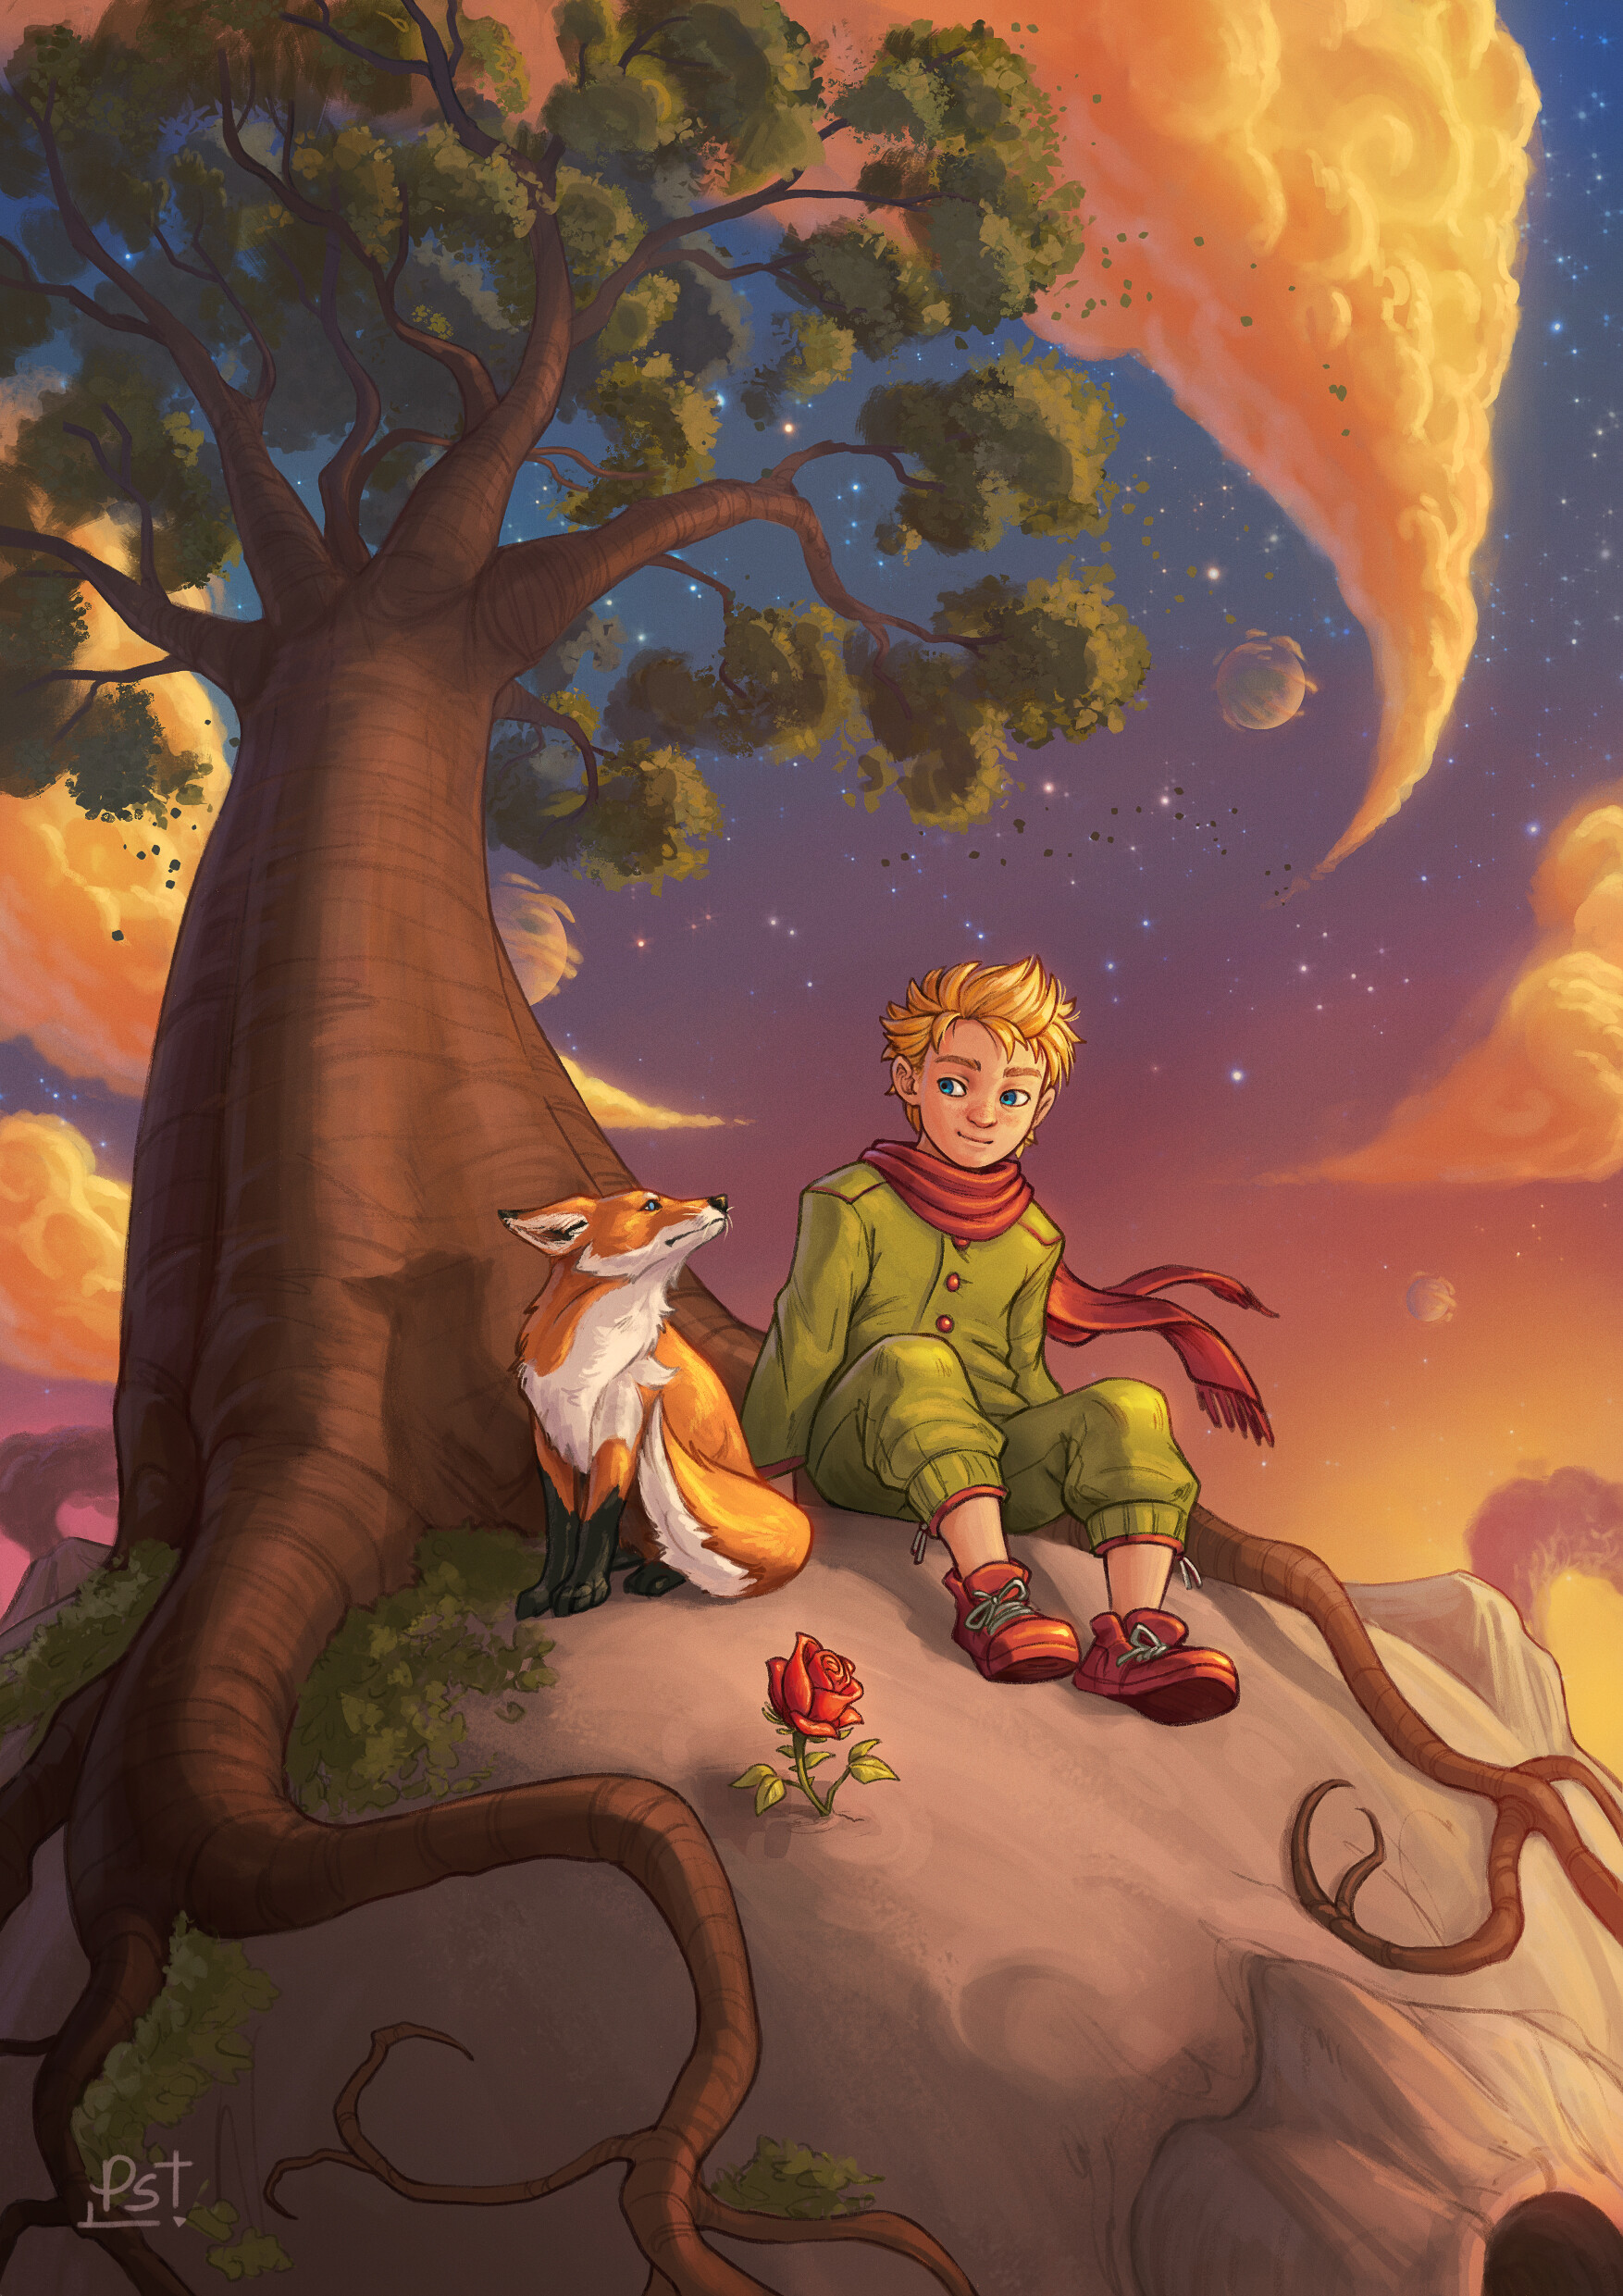 ArtStation - The Little Prince